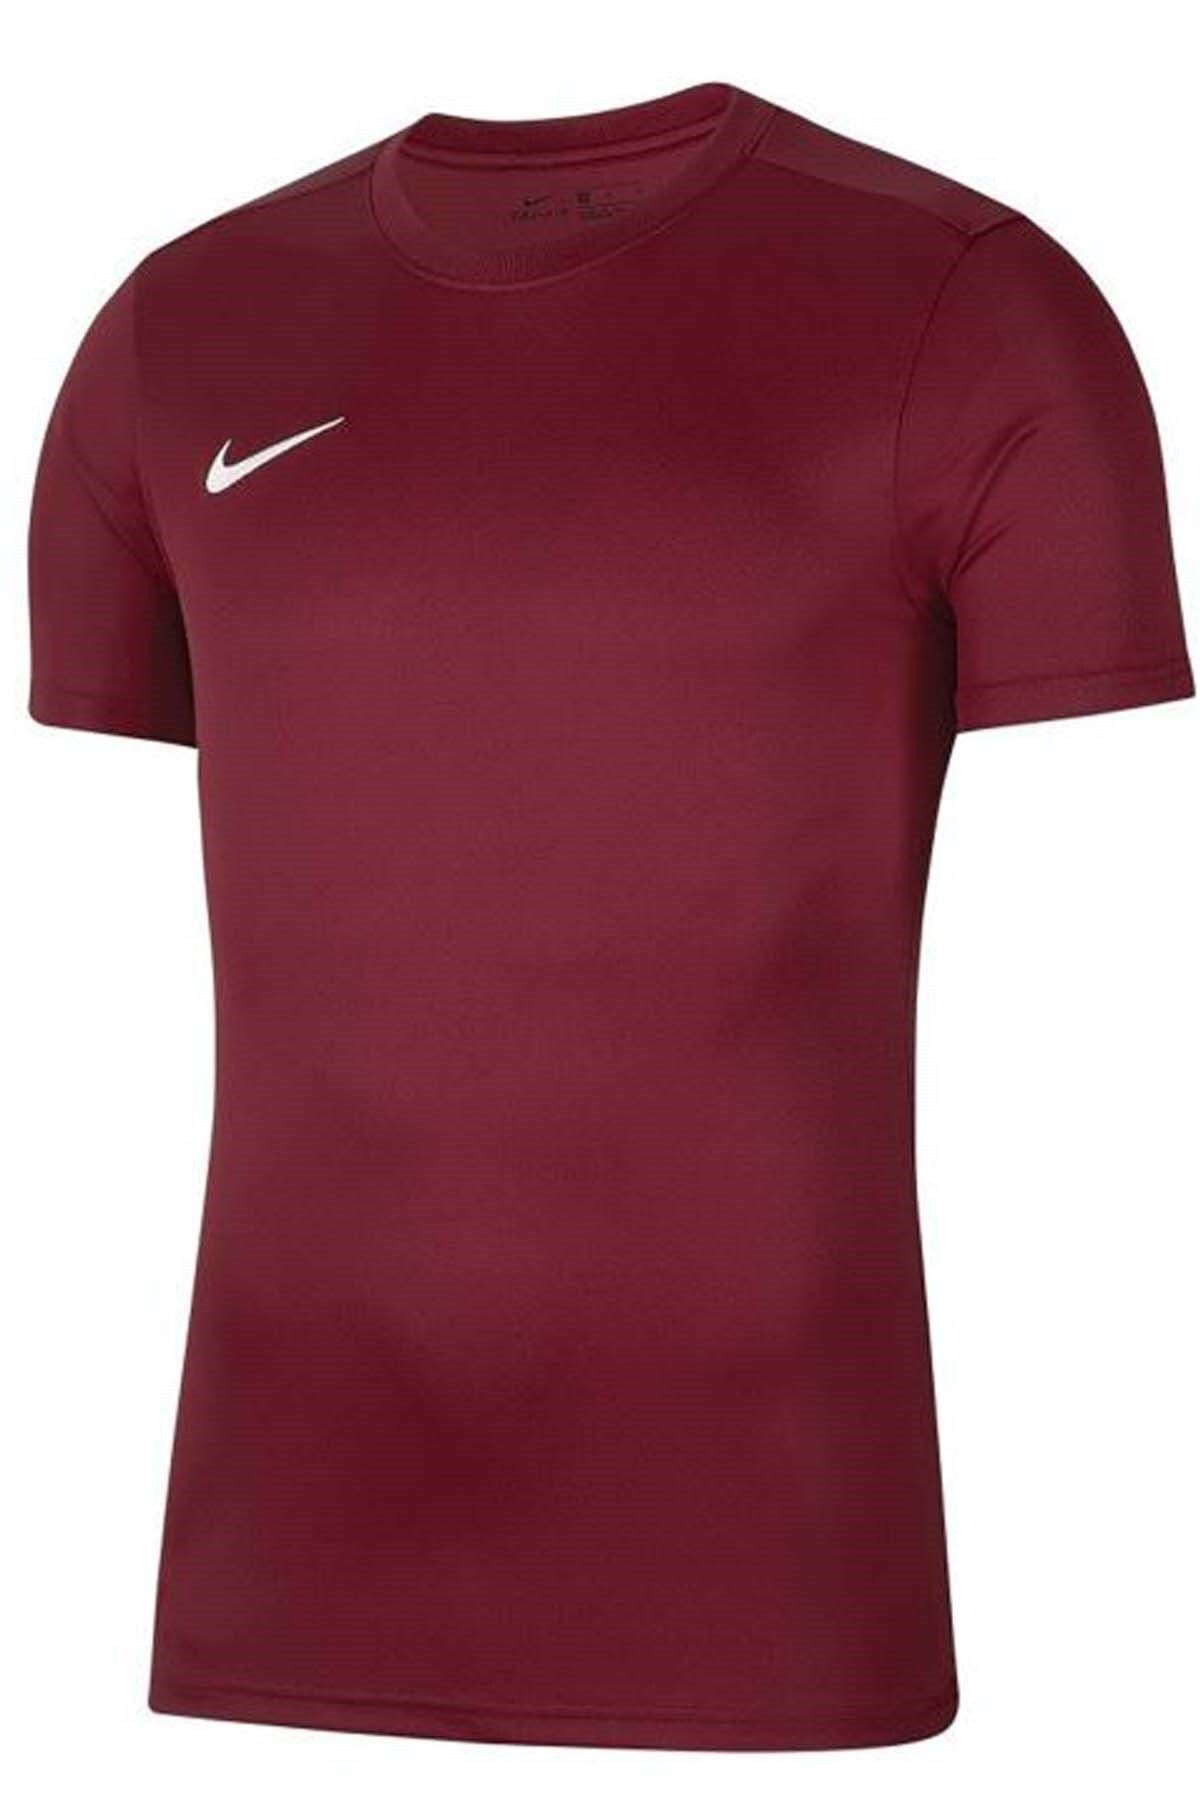 Nike Dry Park Vıı Jsy Ss Erkek Tişört Bv6708-677